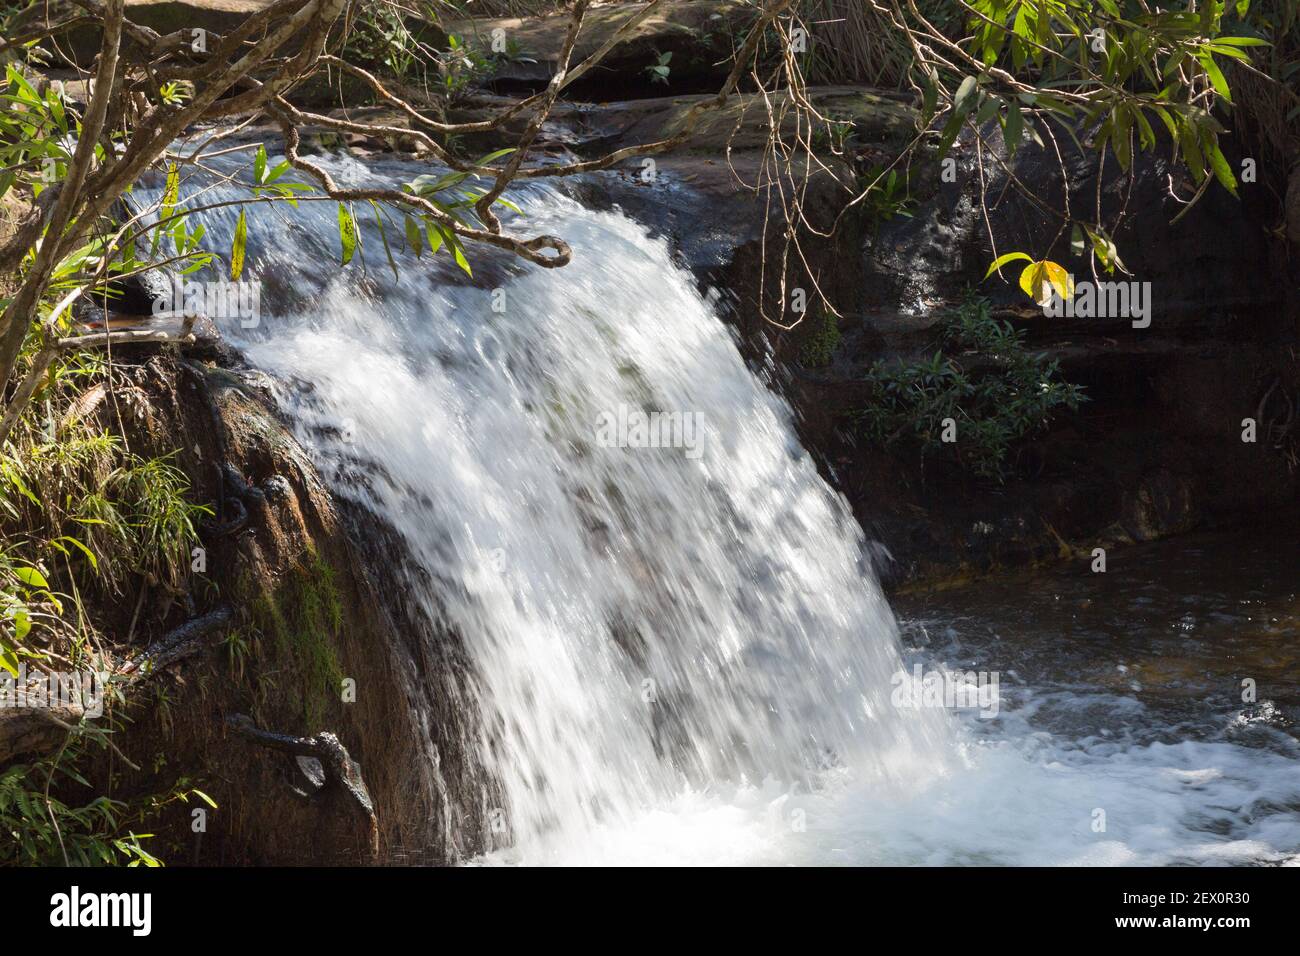 Cachoeira Sete de Setembro in the Chapada dos Guimaraes Nationalpark in Mato Grosso, Brazil Stock Photo